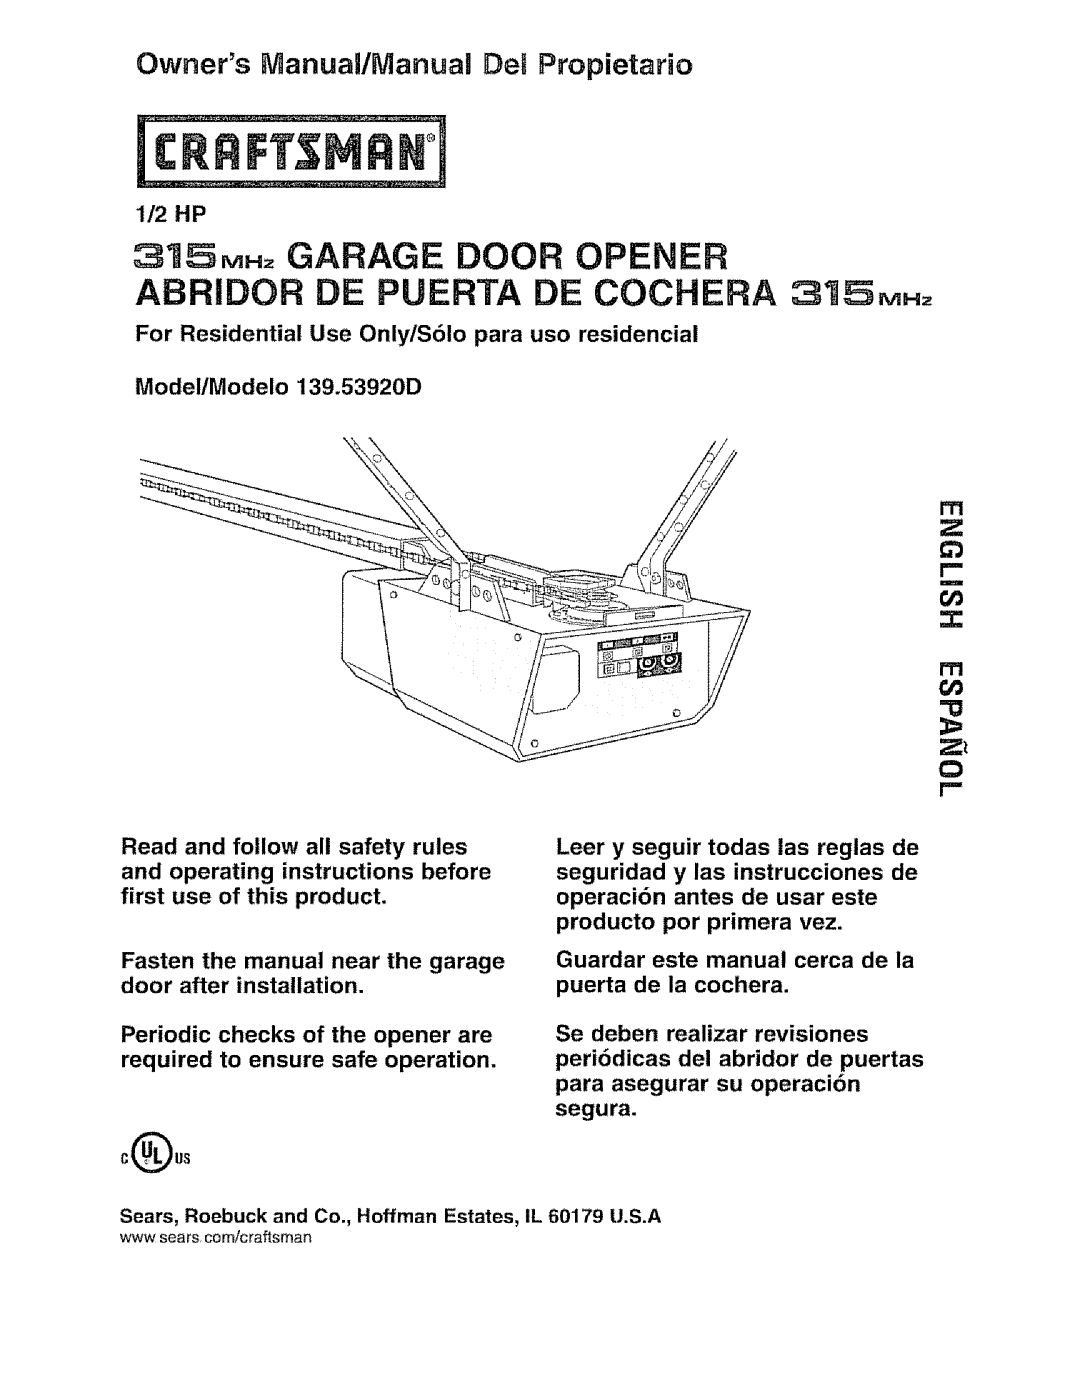 Craftsman 139.53920D owner manual 315MHz Garage Door Opener, Para asegurar su operacibn segura 